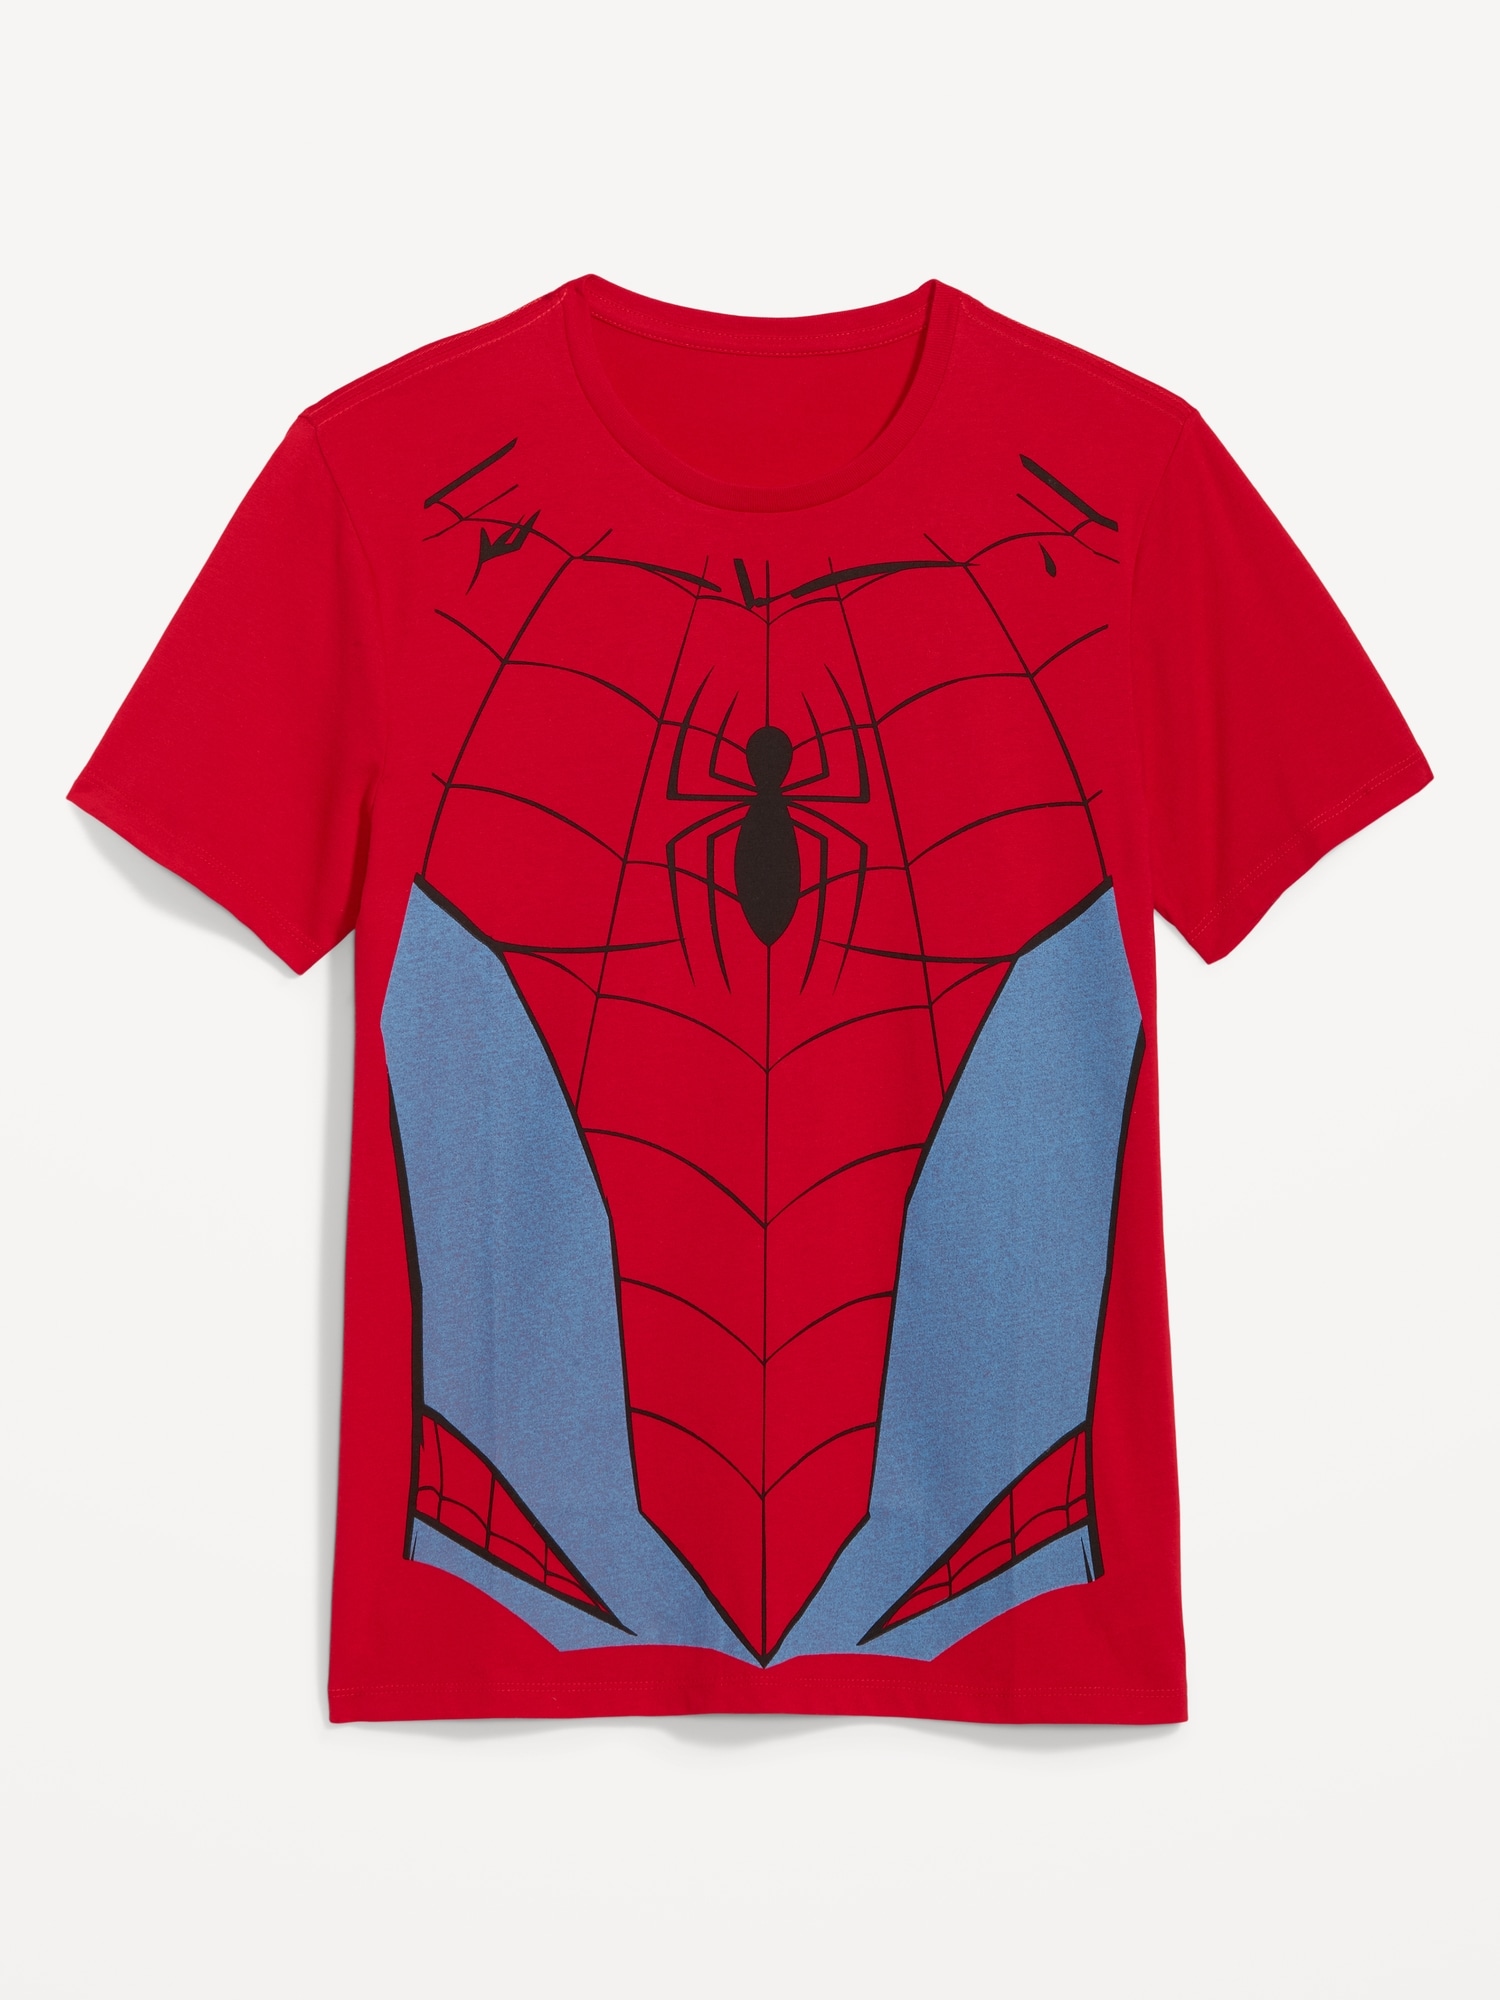 Marvel™ Spider-Man Costume Gender-Neutral T-Shirt for Adults | Old Navy